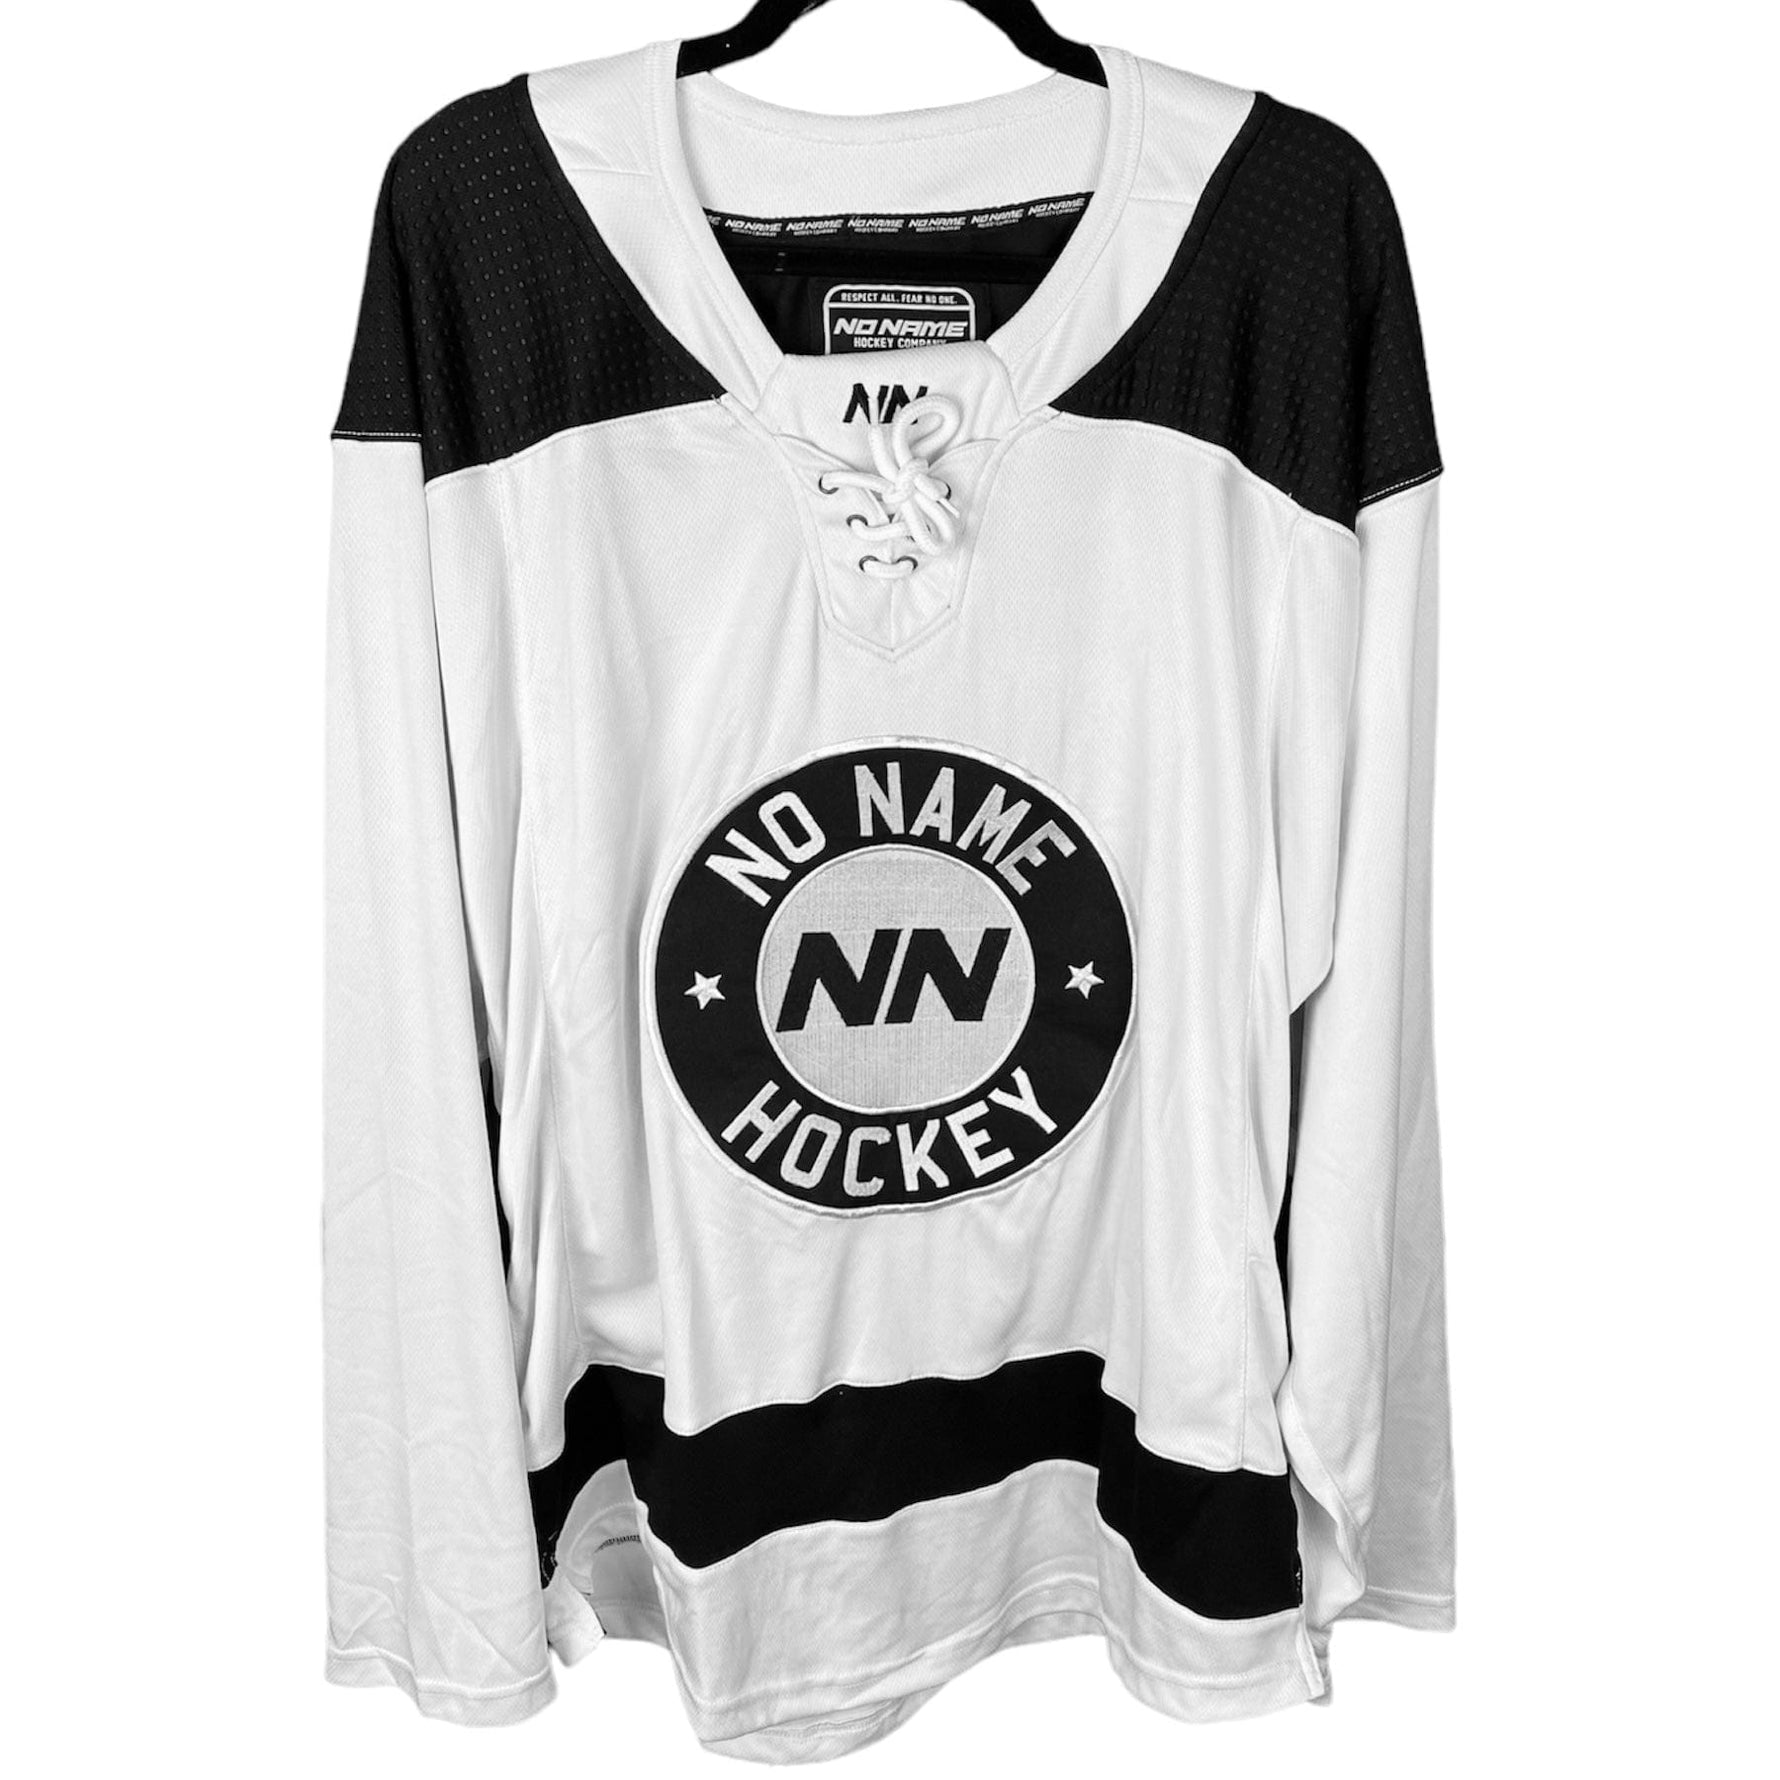 No Name Hockey Ltd. jersey White Adult M NN White Practice Jersey